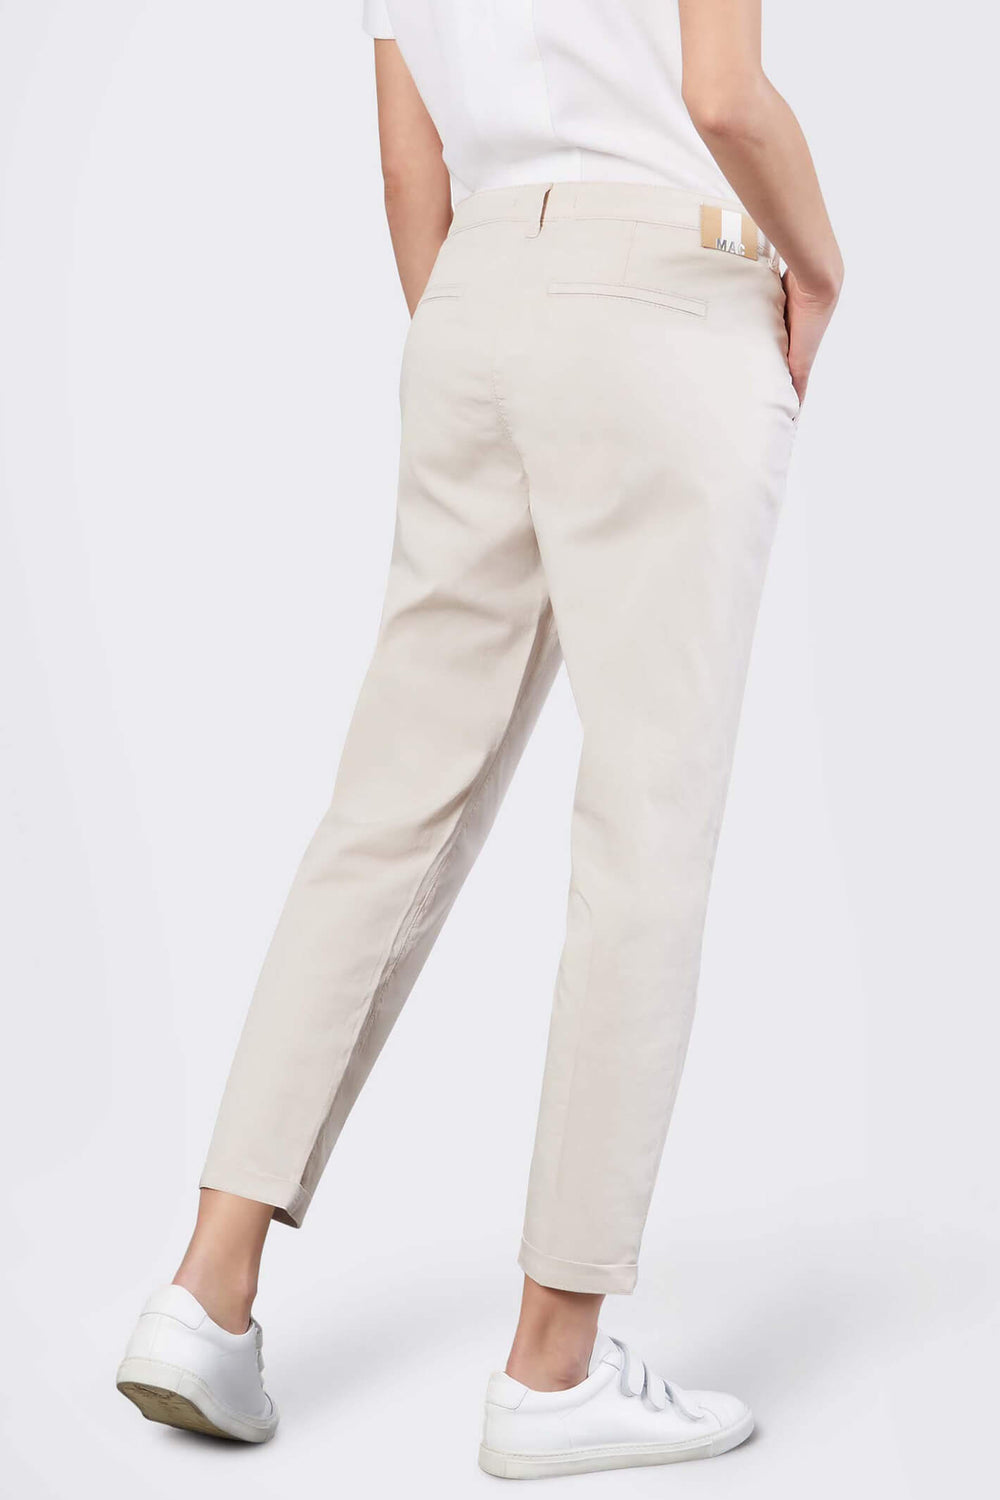 Mac Chino Turn Up 3075-00-0434L Ivory Stretch Gabardine Trousers - Olivia Grace Fashion